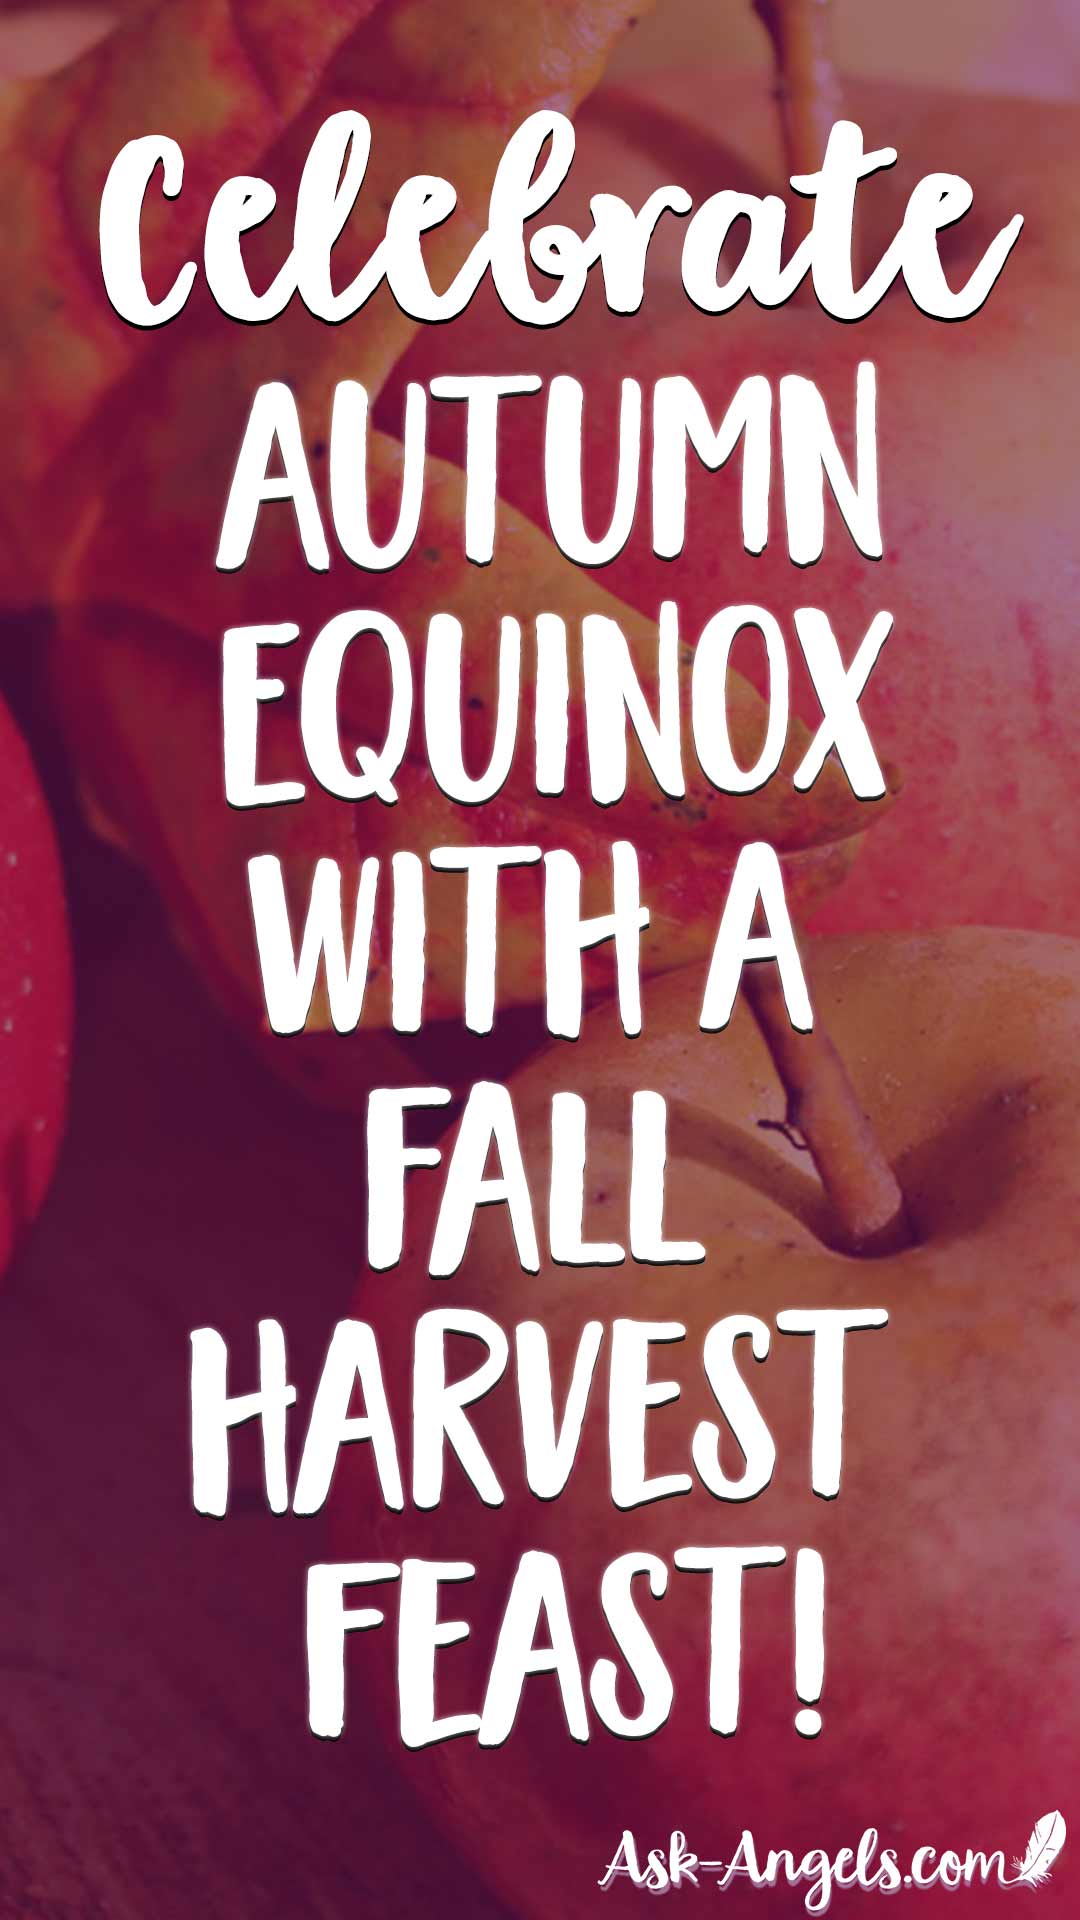 Celebrate autumn equinox will a fall harvest feast.